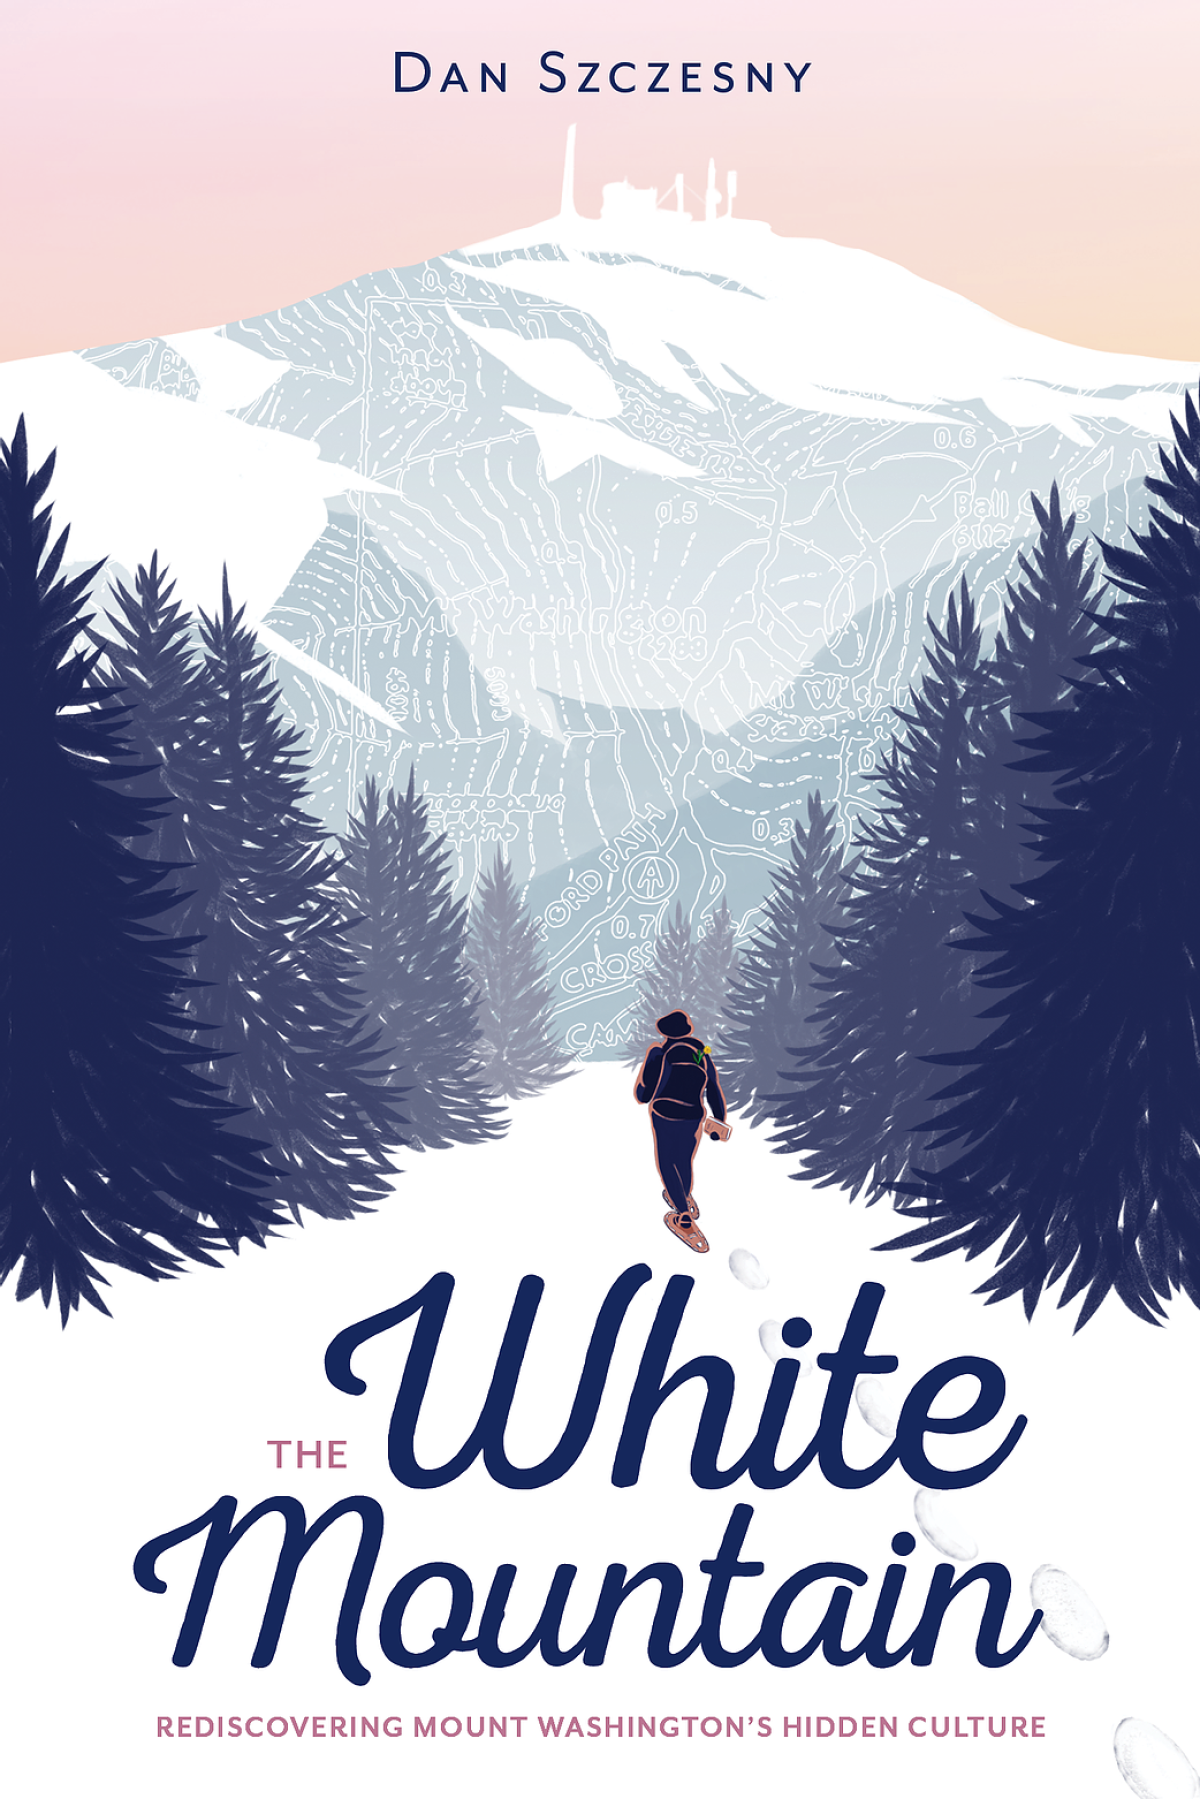 Dan Szczesny’s travelogue, “The White Mountain.”